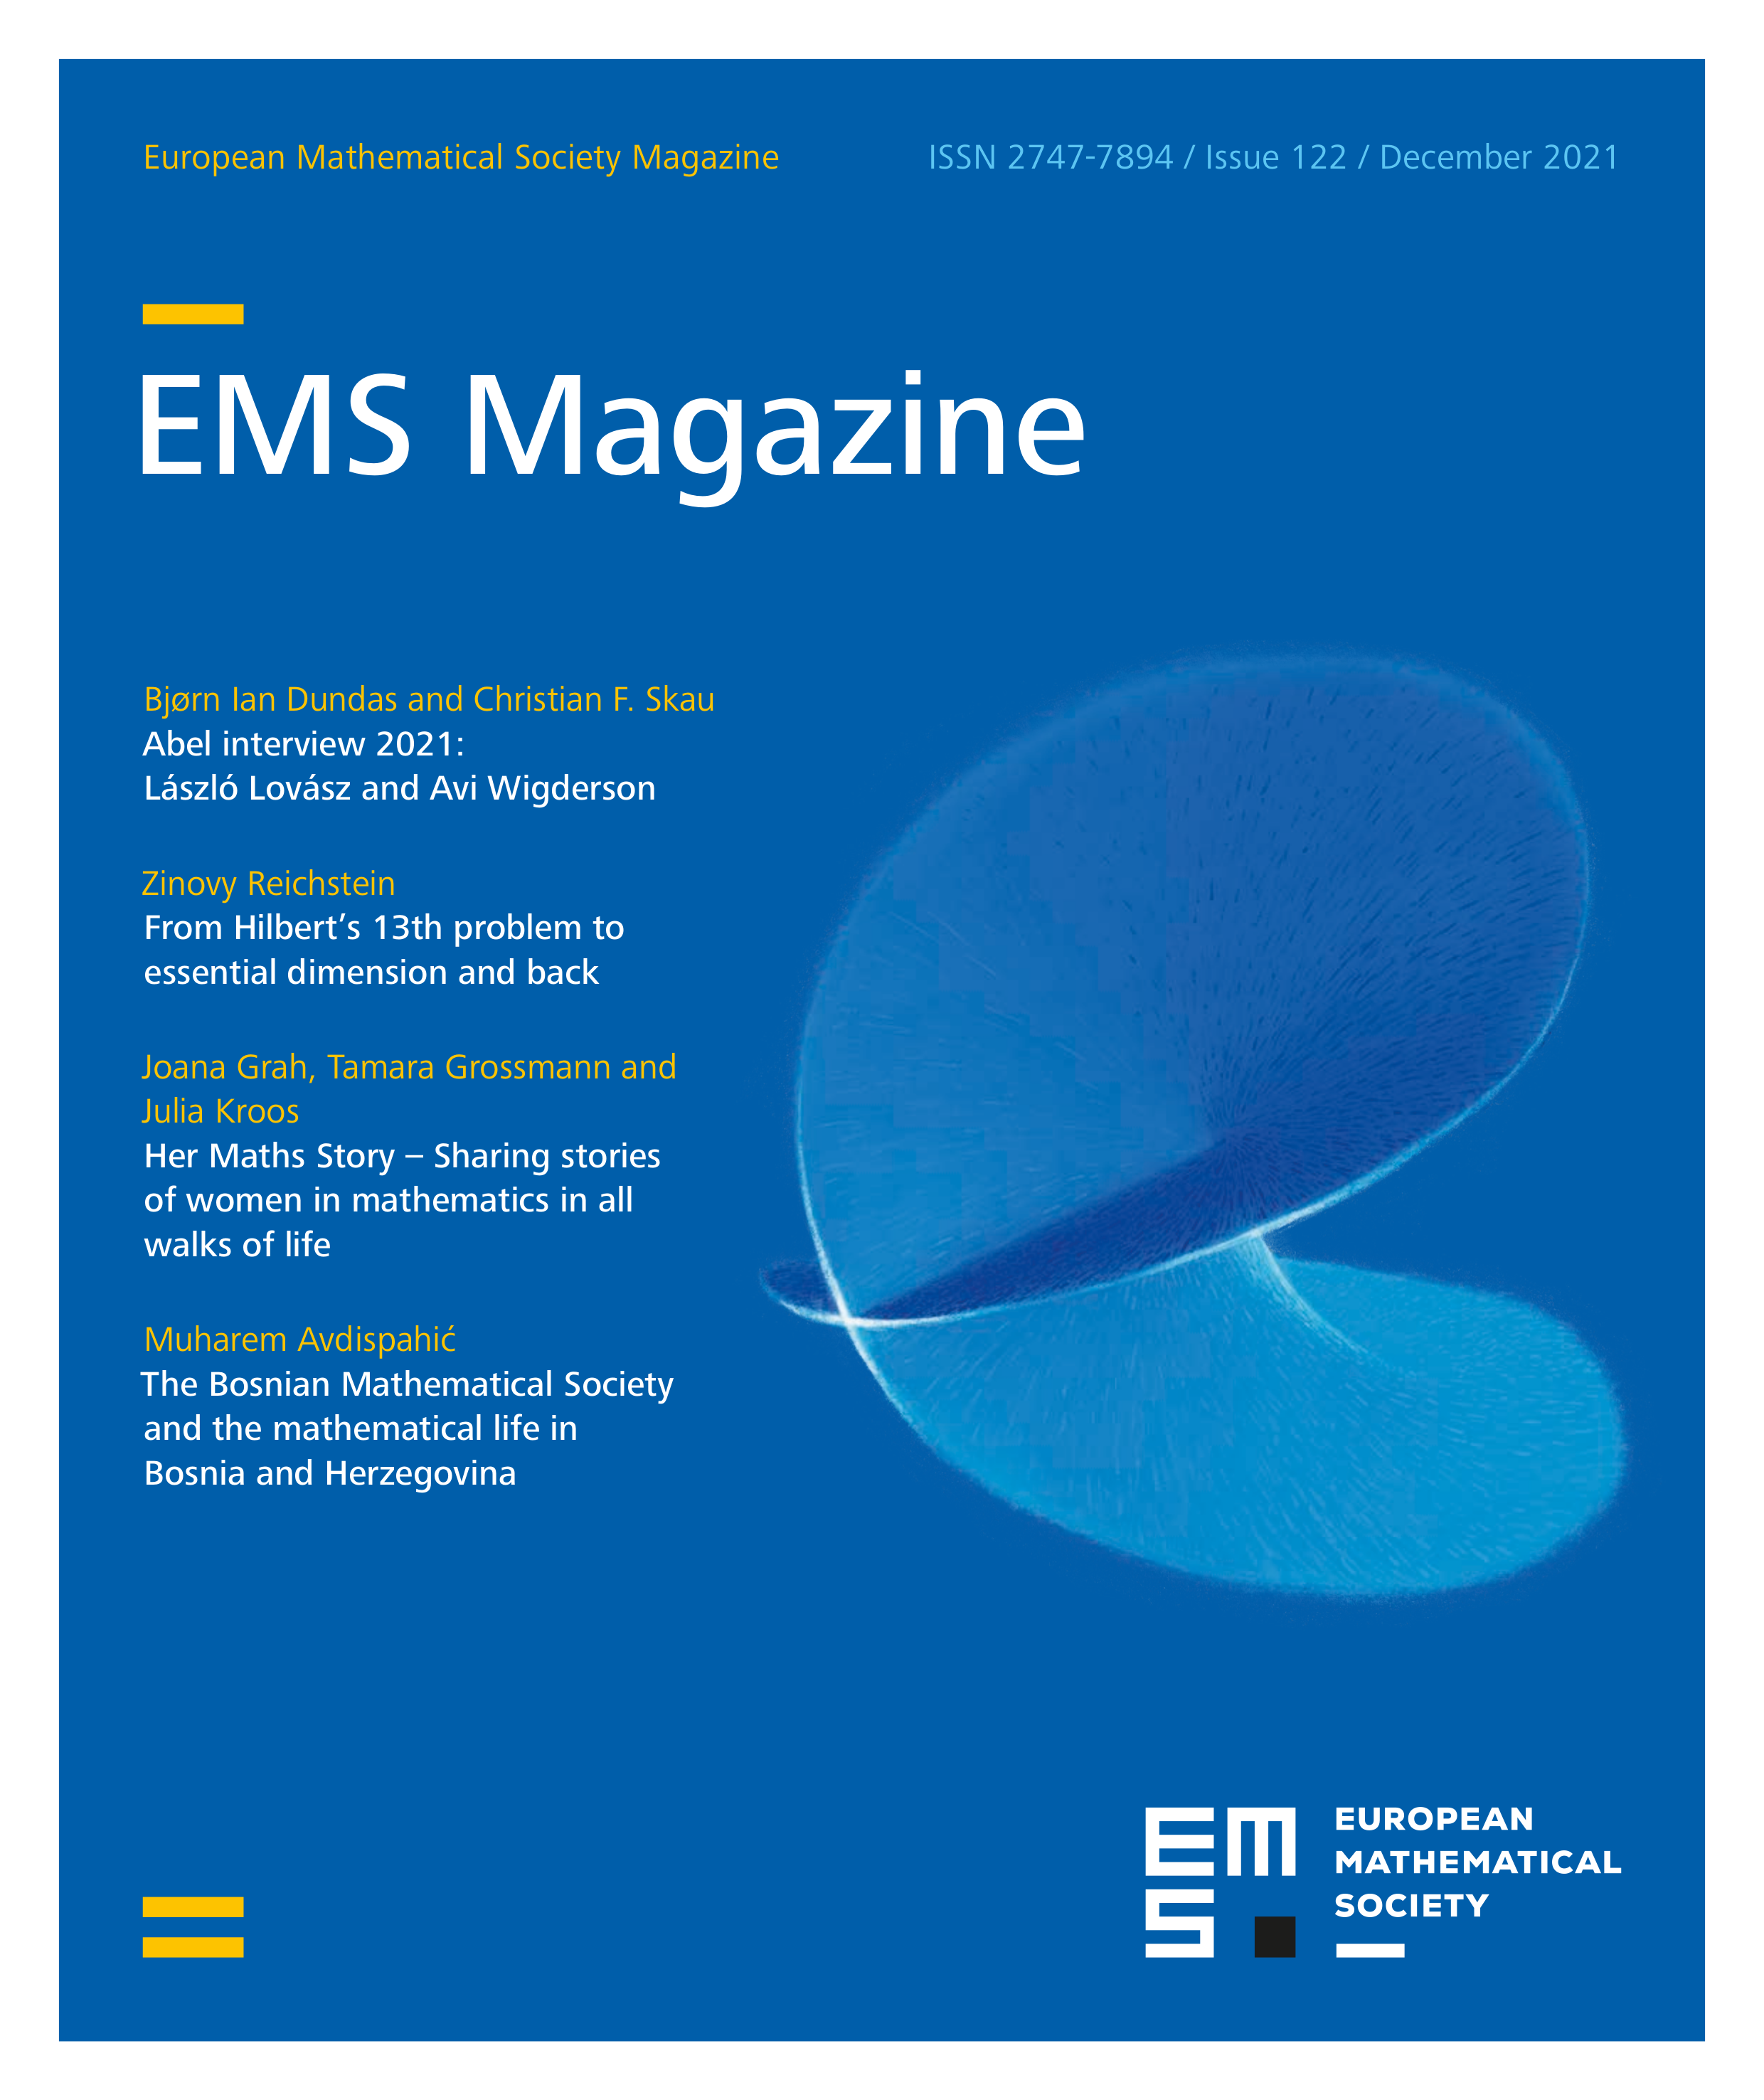 European Mathematical Society Magazine cover